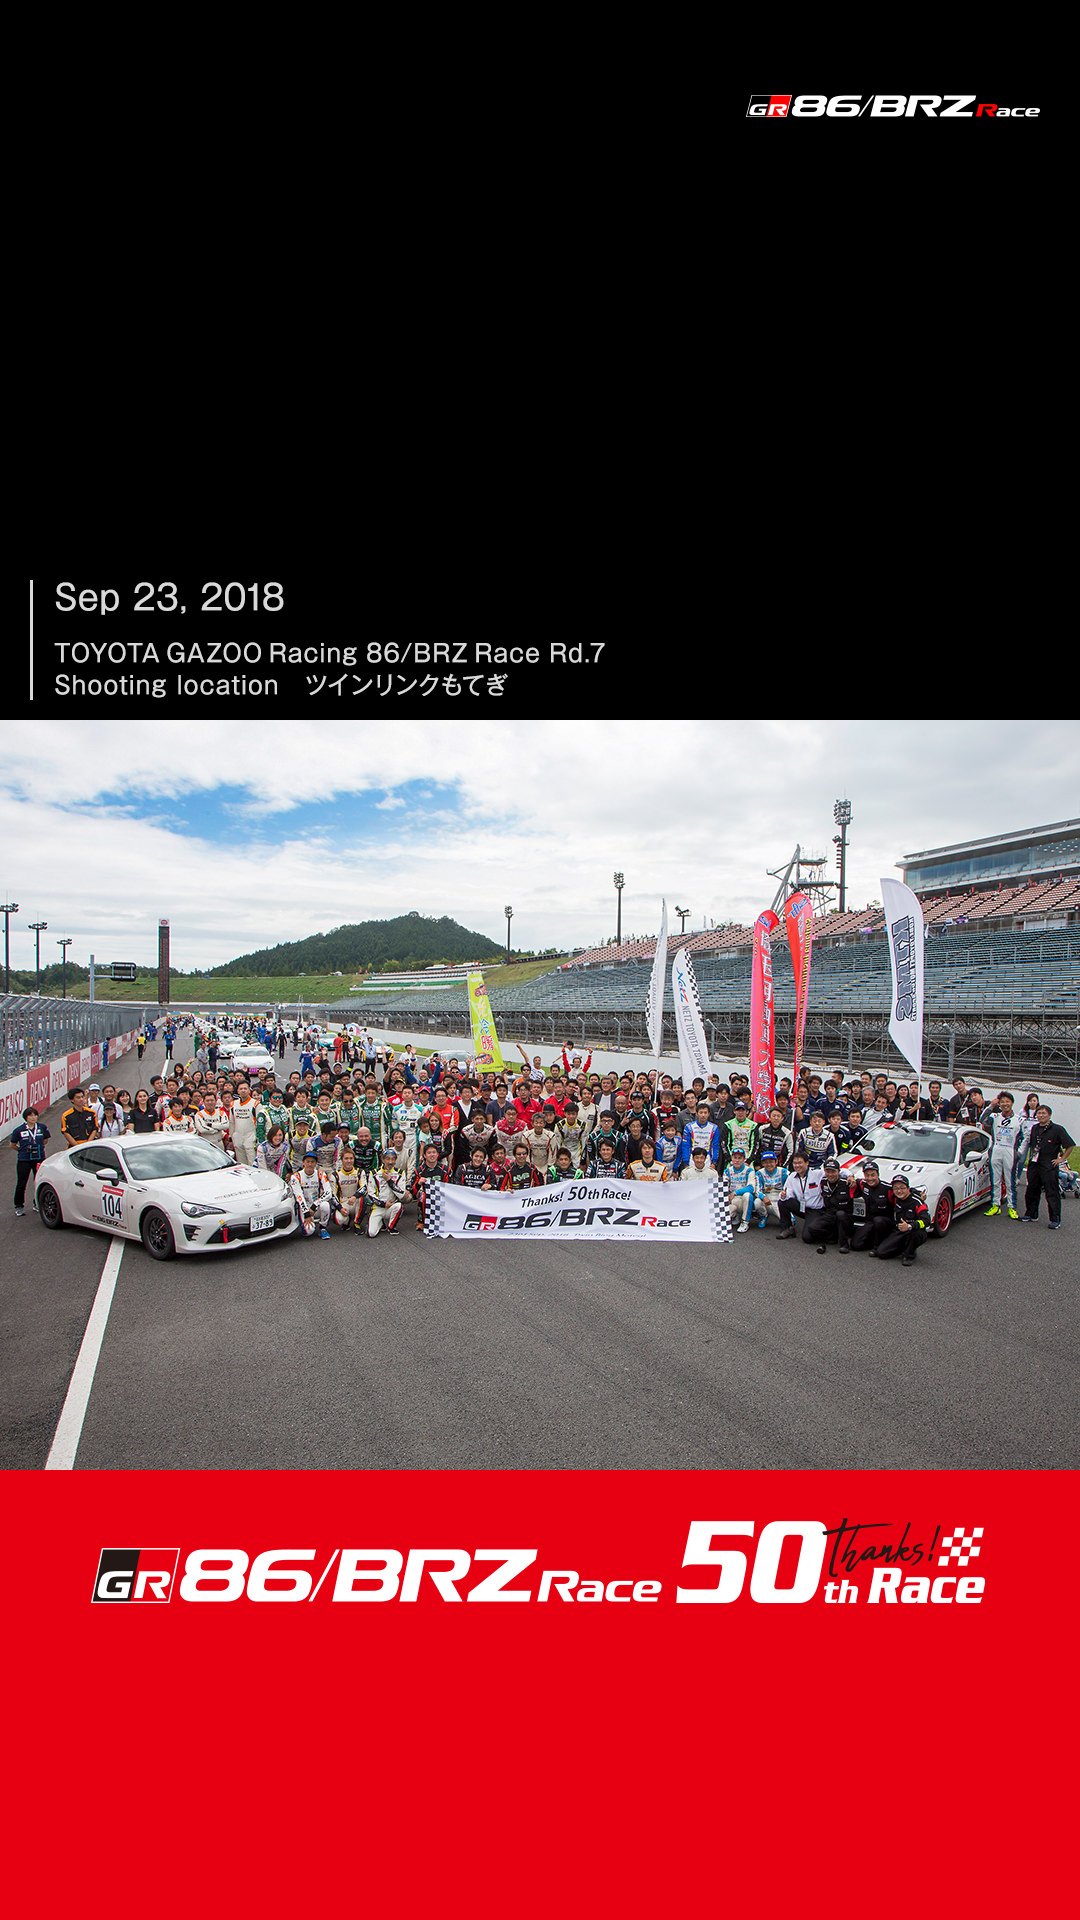 86 Brz Race 2018年 Rd 7 ツインリンクもてぎ50戦記念壁紙 フォトギャラリー 86 Brz Race Toyota Gazoo Racing